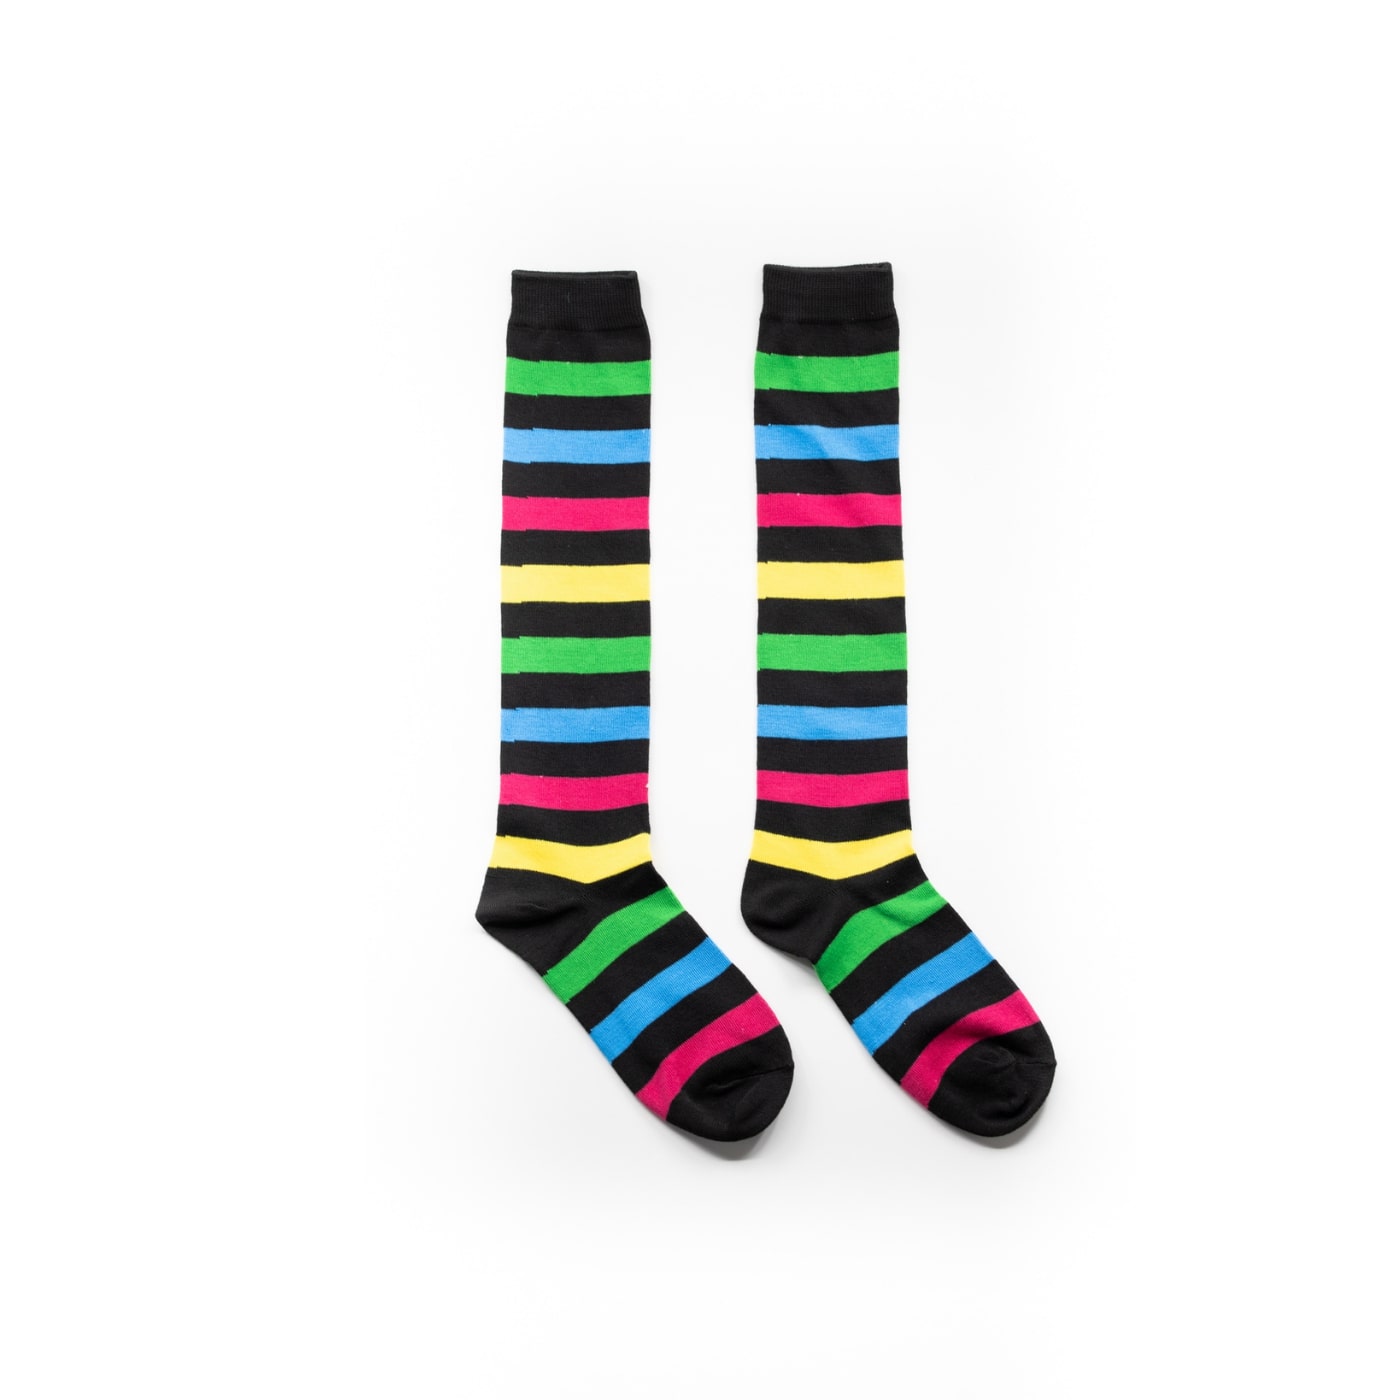 Black Stripe Knee High Socks by RainbowsAndFairies.com.au (Stripe Long Socks - Rainbow - Stockings - Colourful Socks - Vintage Inspired) - SKU: FW_SOCKS_STRIPE_BLA - Pic-02